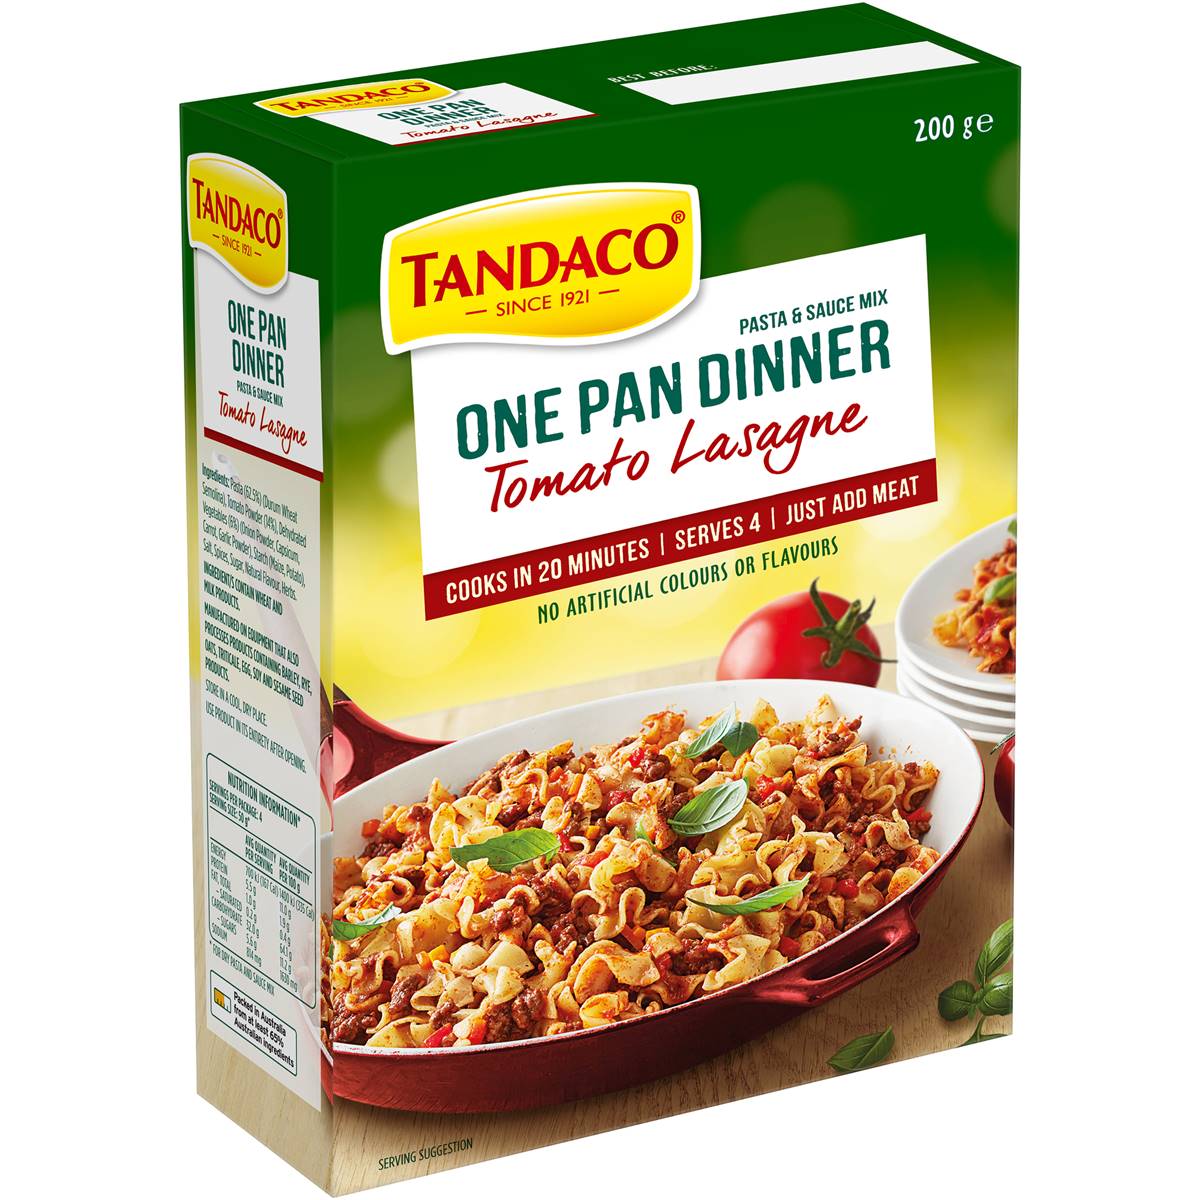 Calories in Tandaco One Pan Dinner Pasta Tomato Lasagne